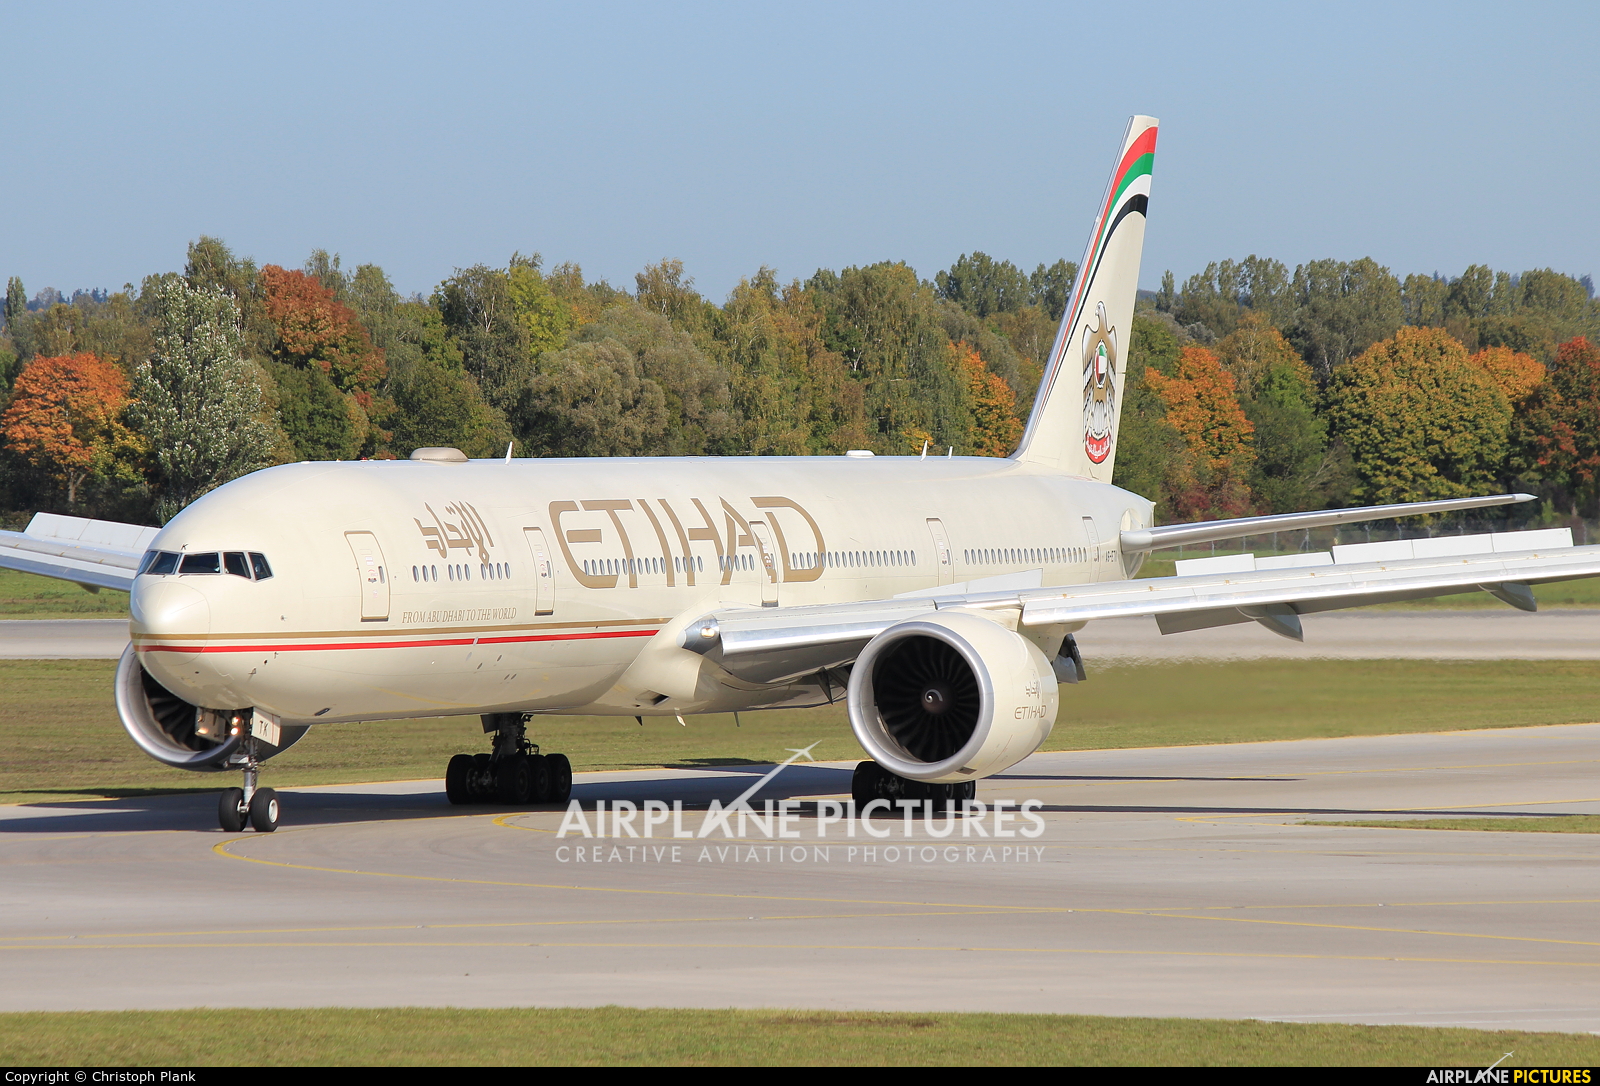 Etihad Airways A6-ETK aircraft at Munich